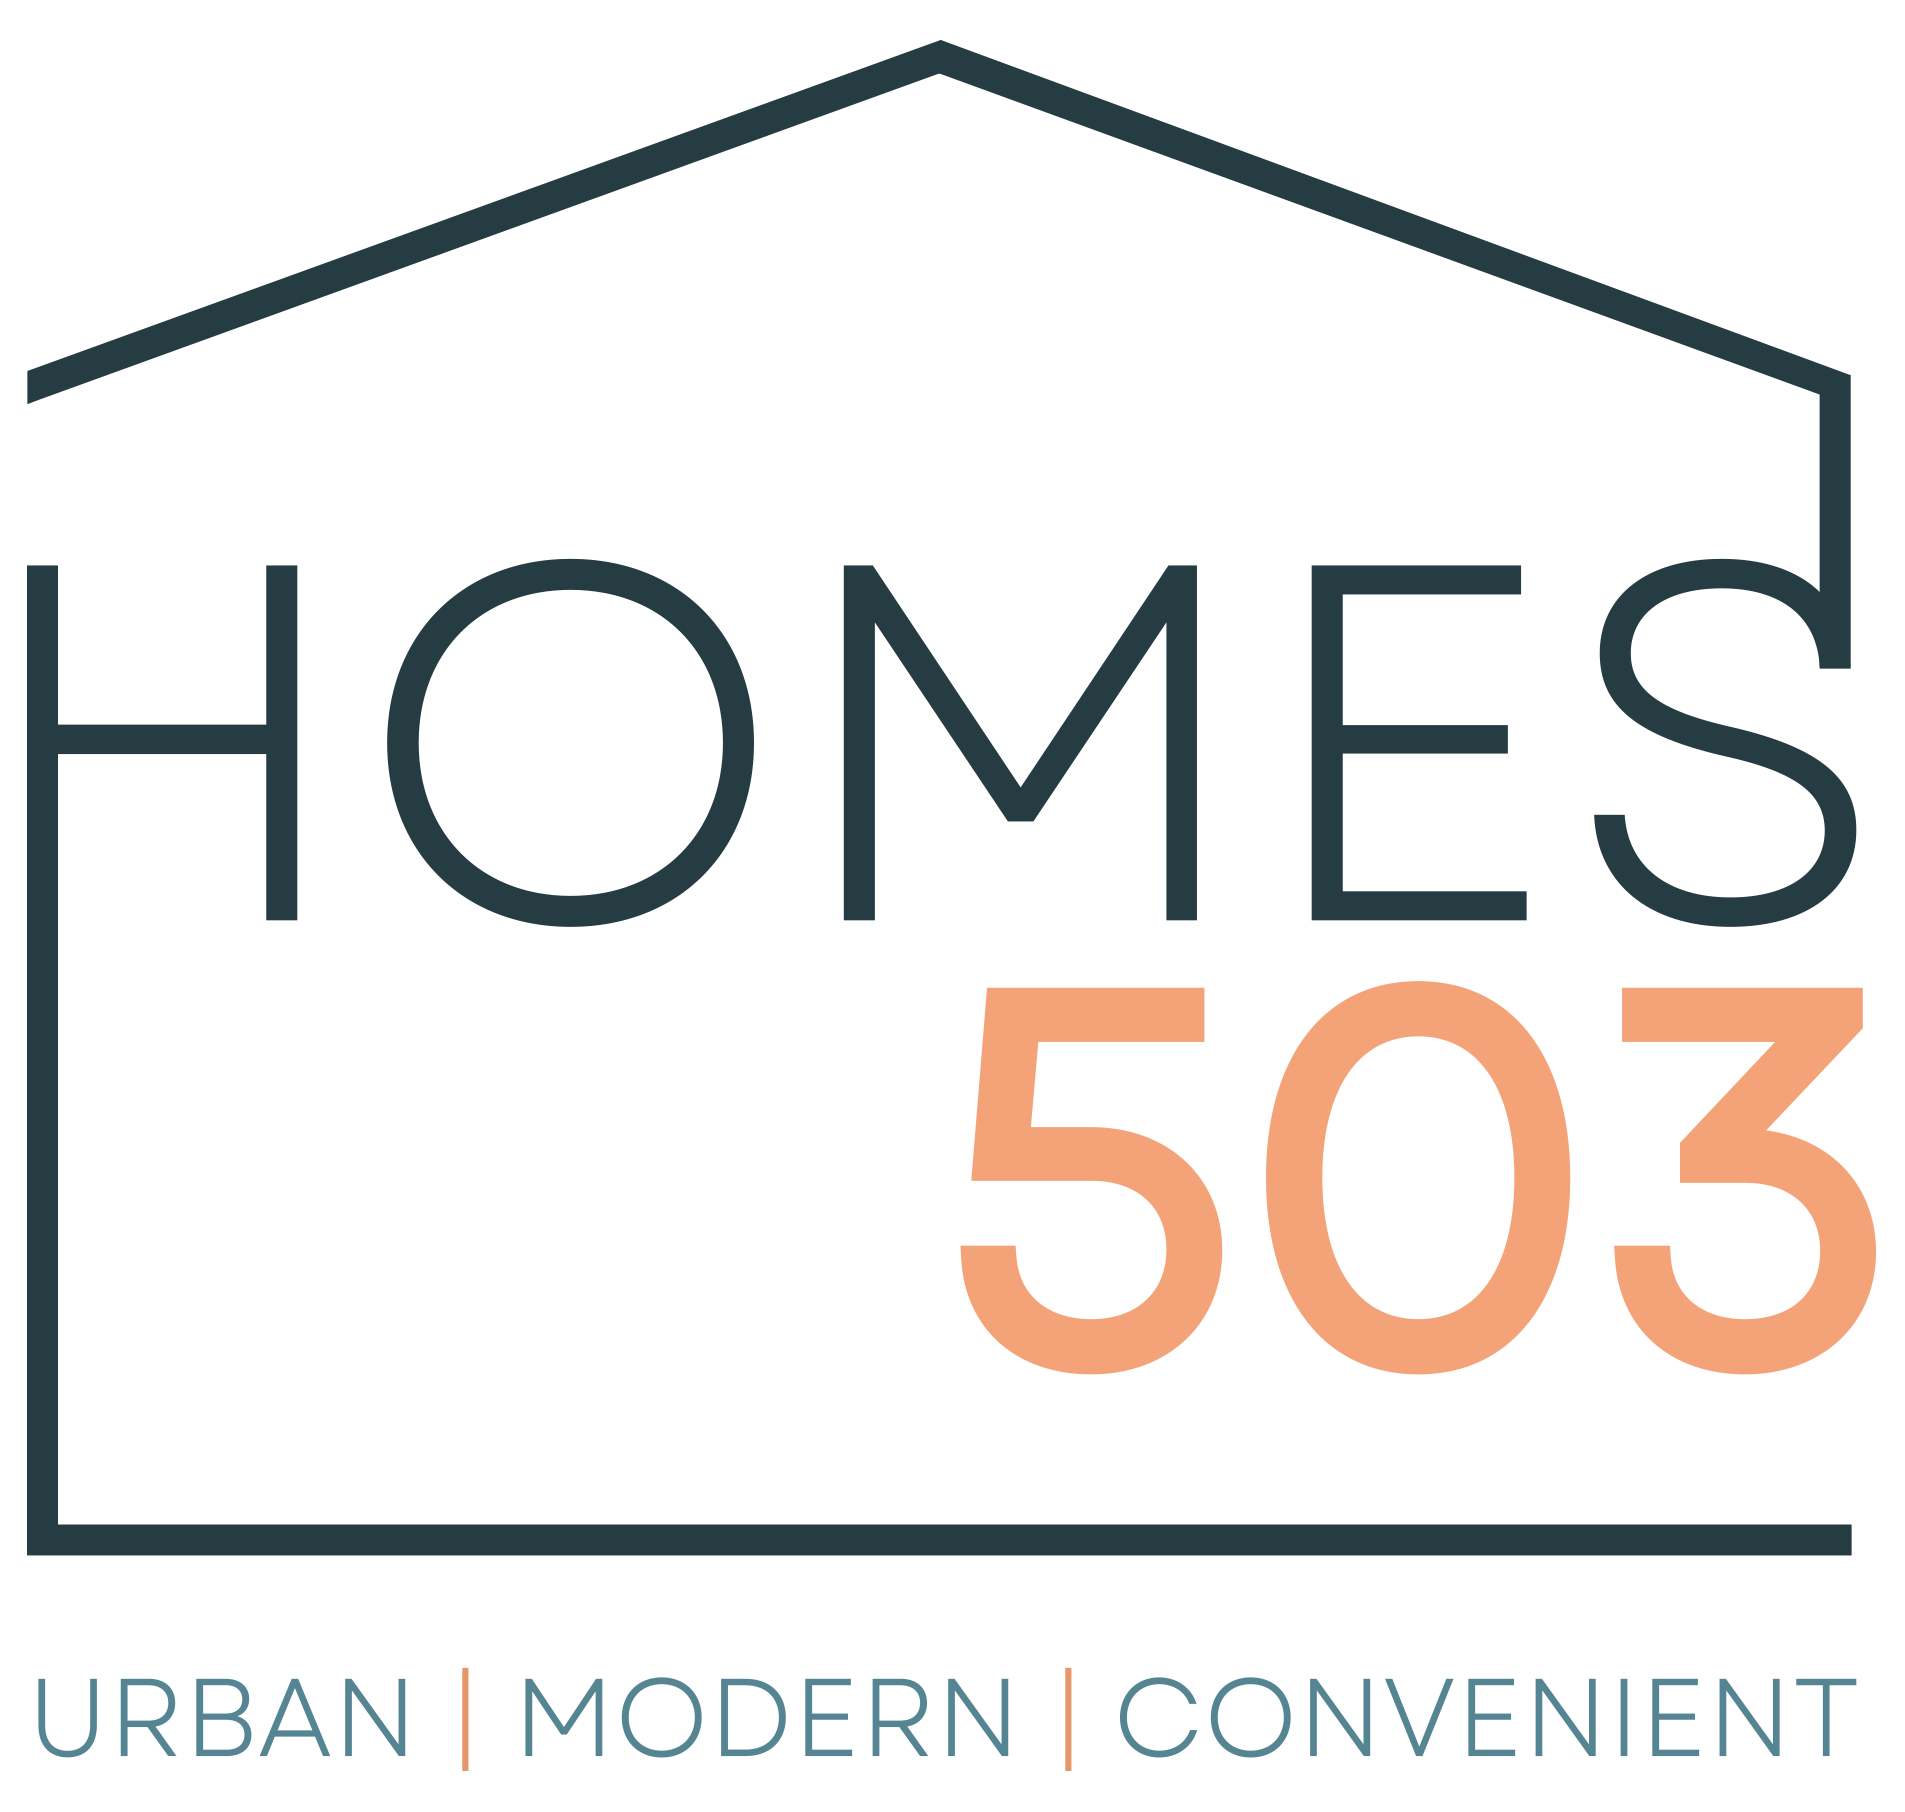 Homes 503